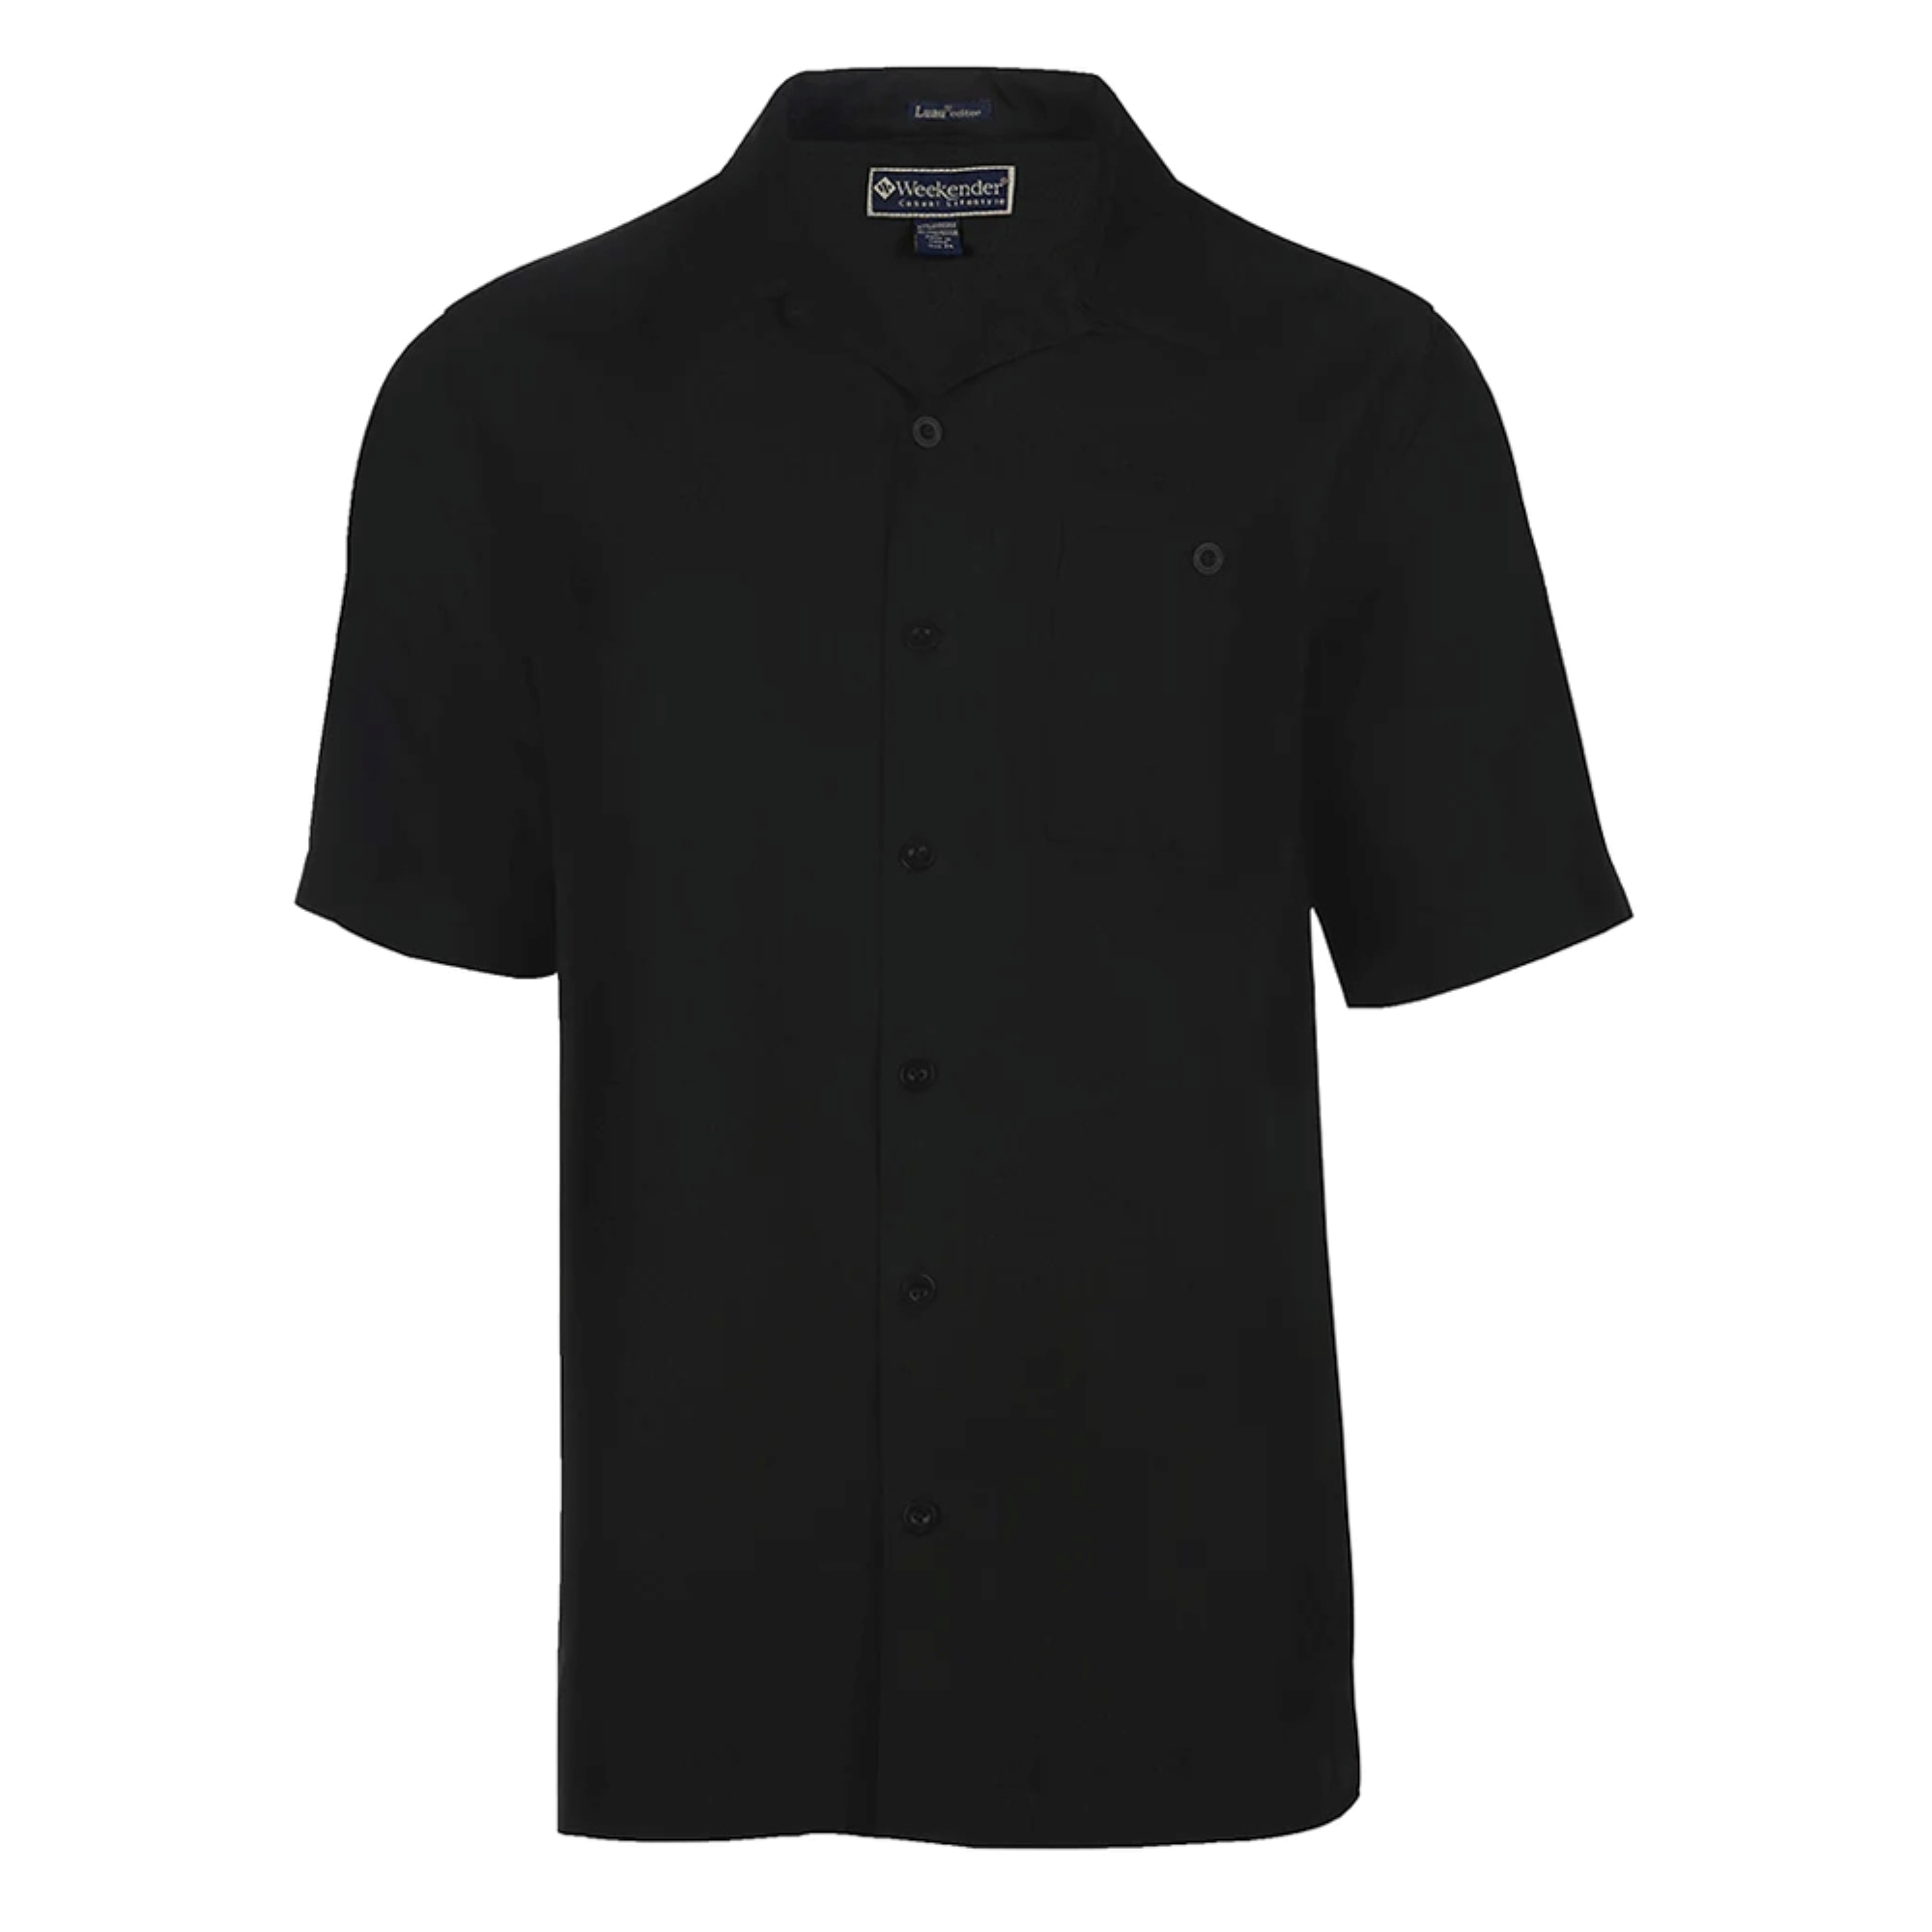 Weekender Old Fashioned Guy Short Sleeve Shirt - Black - Front